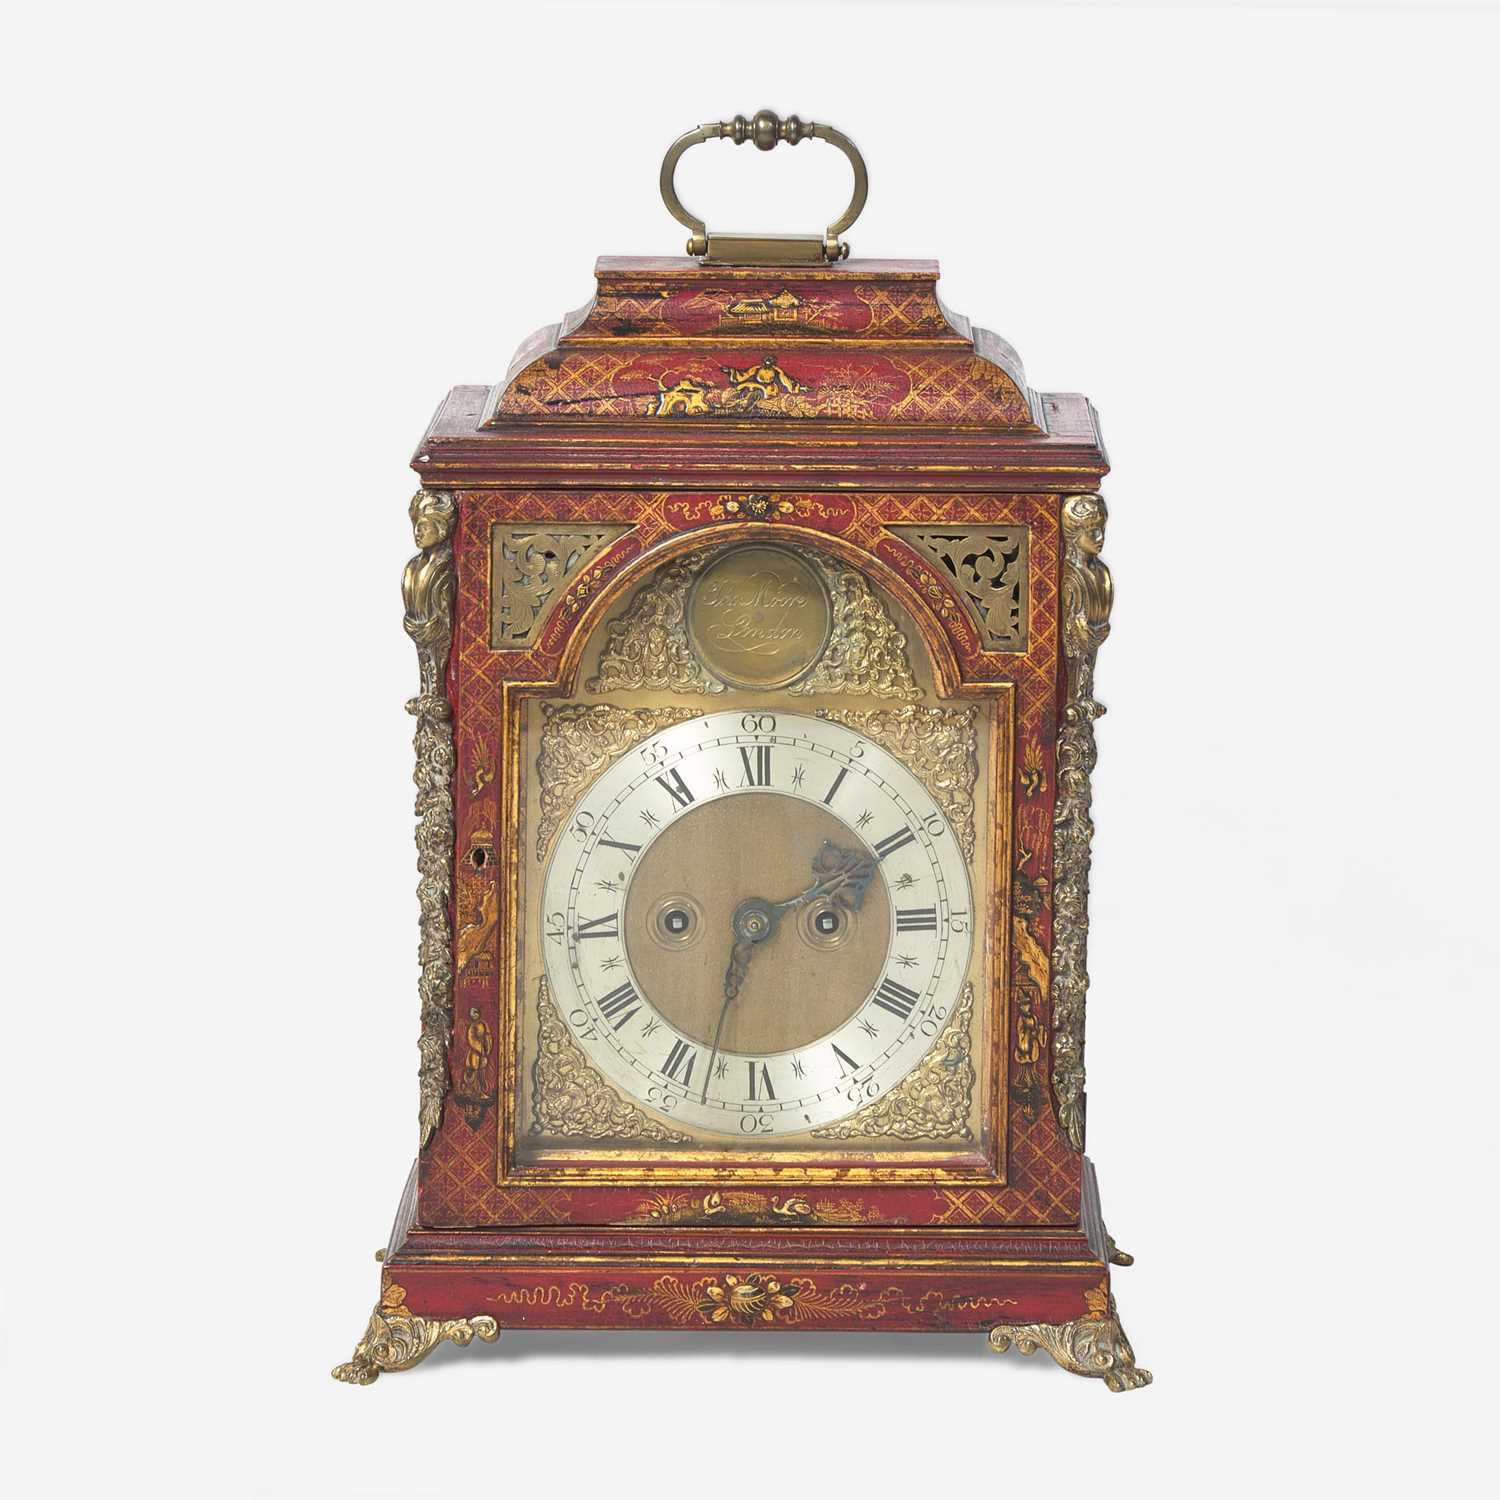 Lot 18 - A George III gilt-bronze mounted red japanned bracket clock